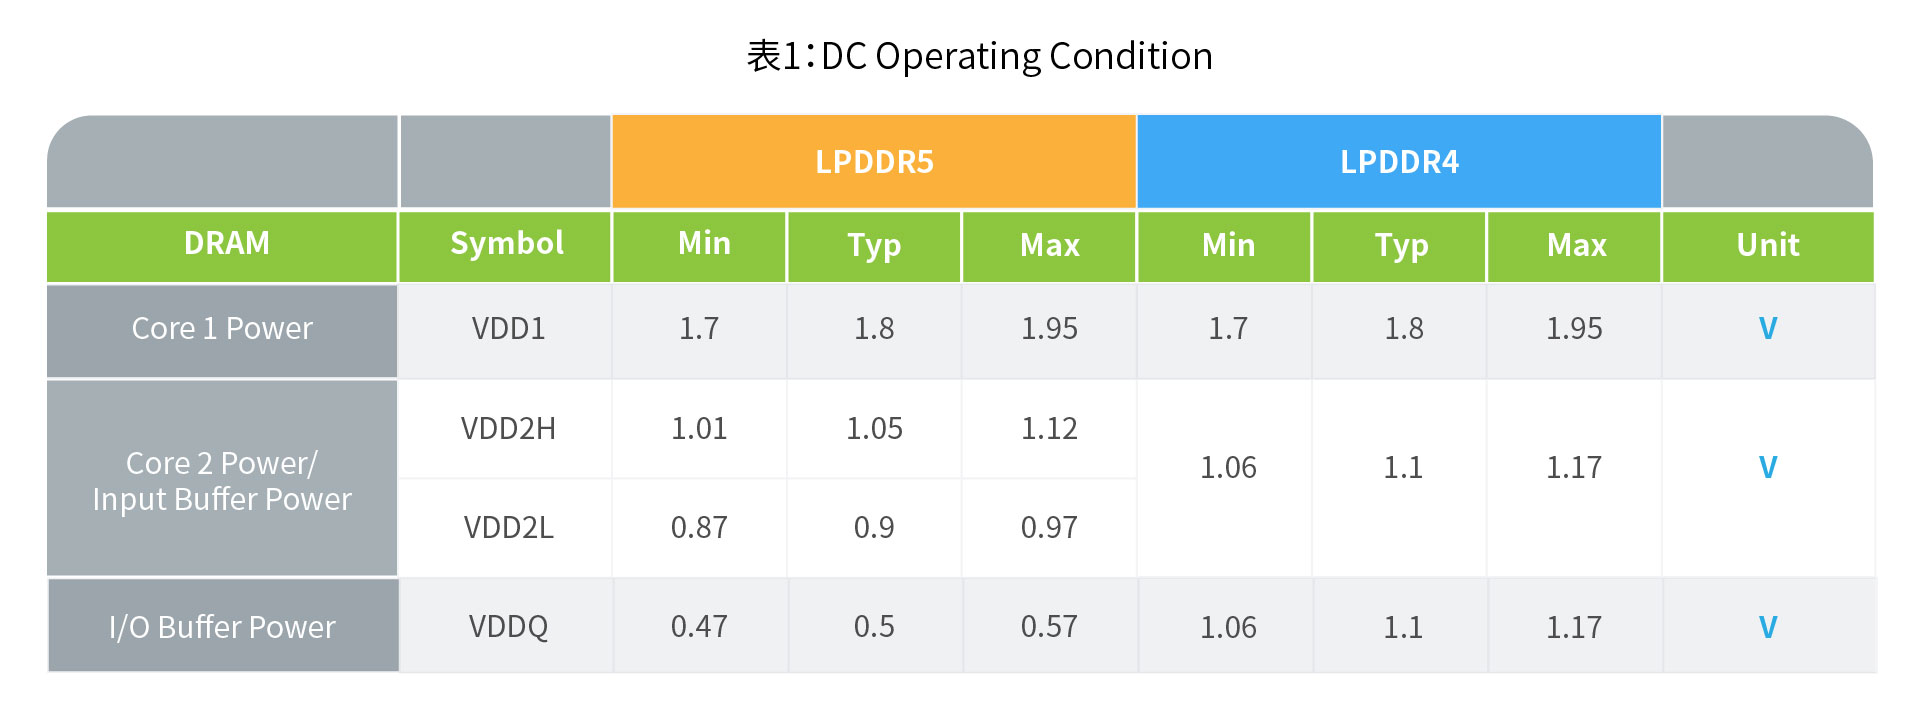 LPDDR5支援更低工作電壓值，故可達到比LPDDR4更低功耗。